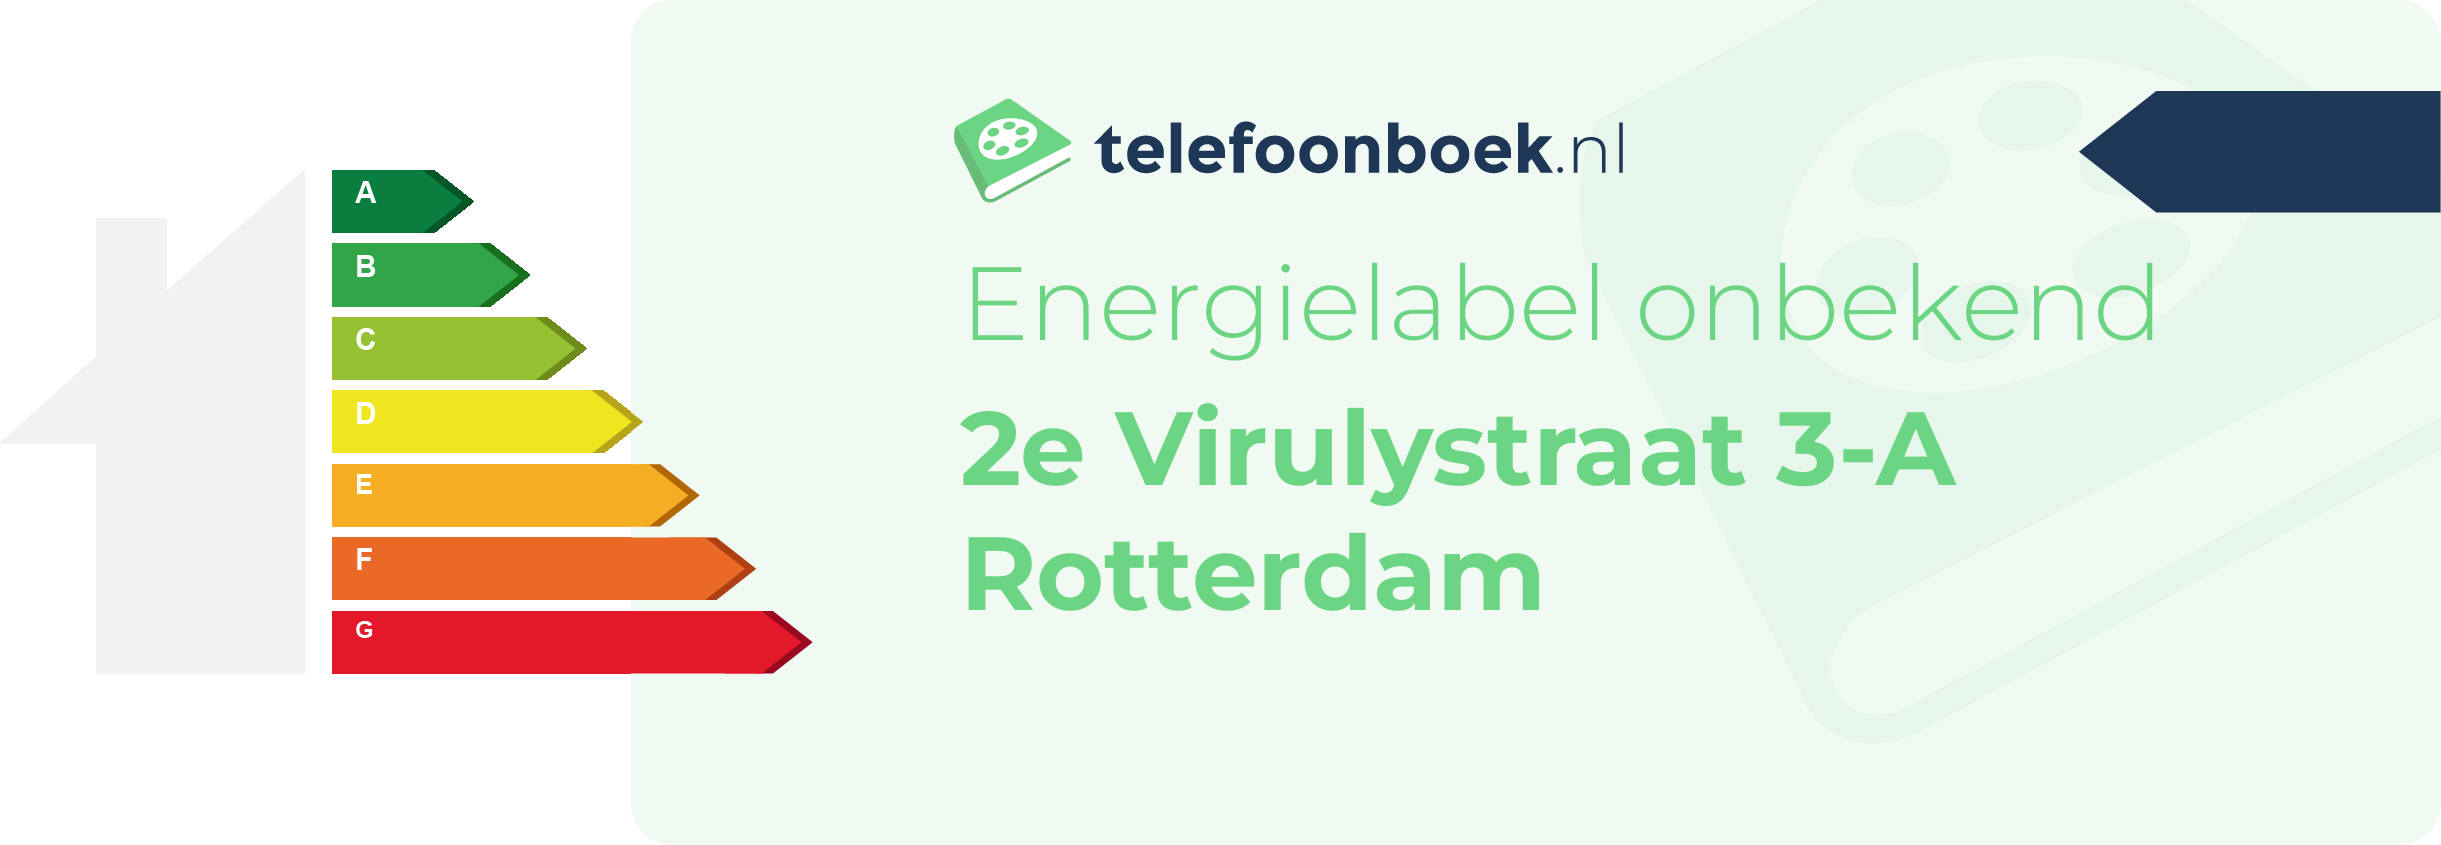 Energielabel 2e Virulystraat 3-A Rotterdam